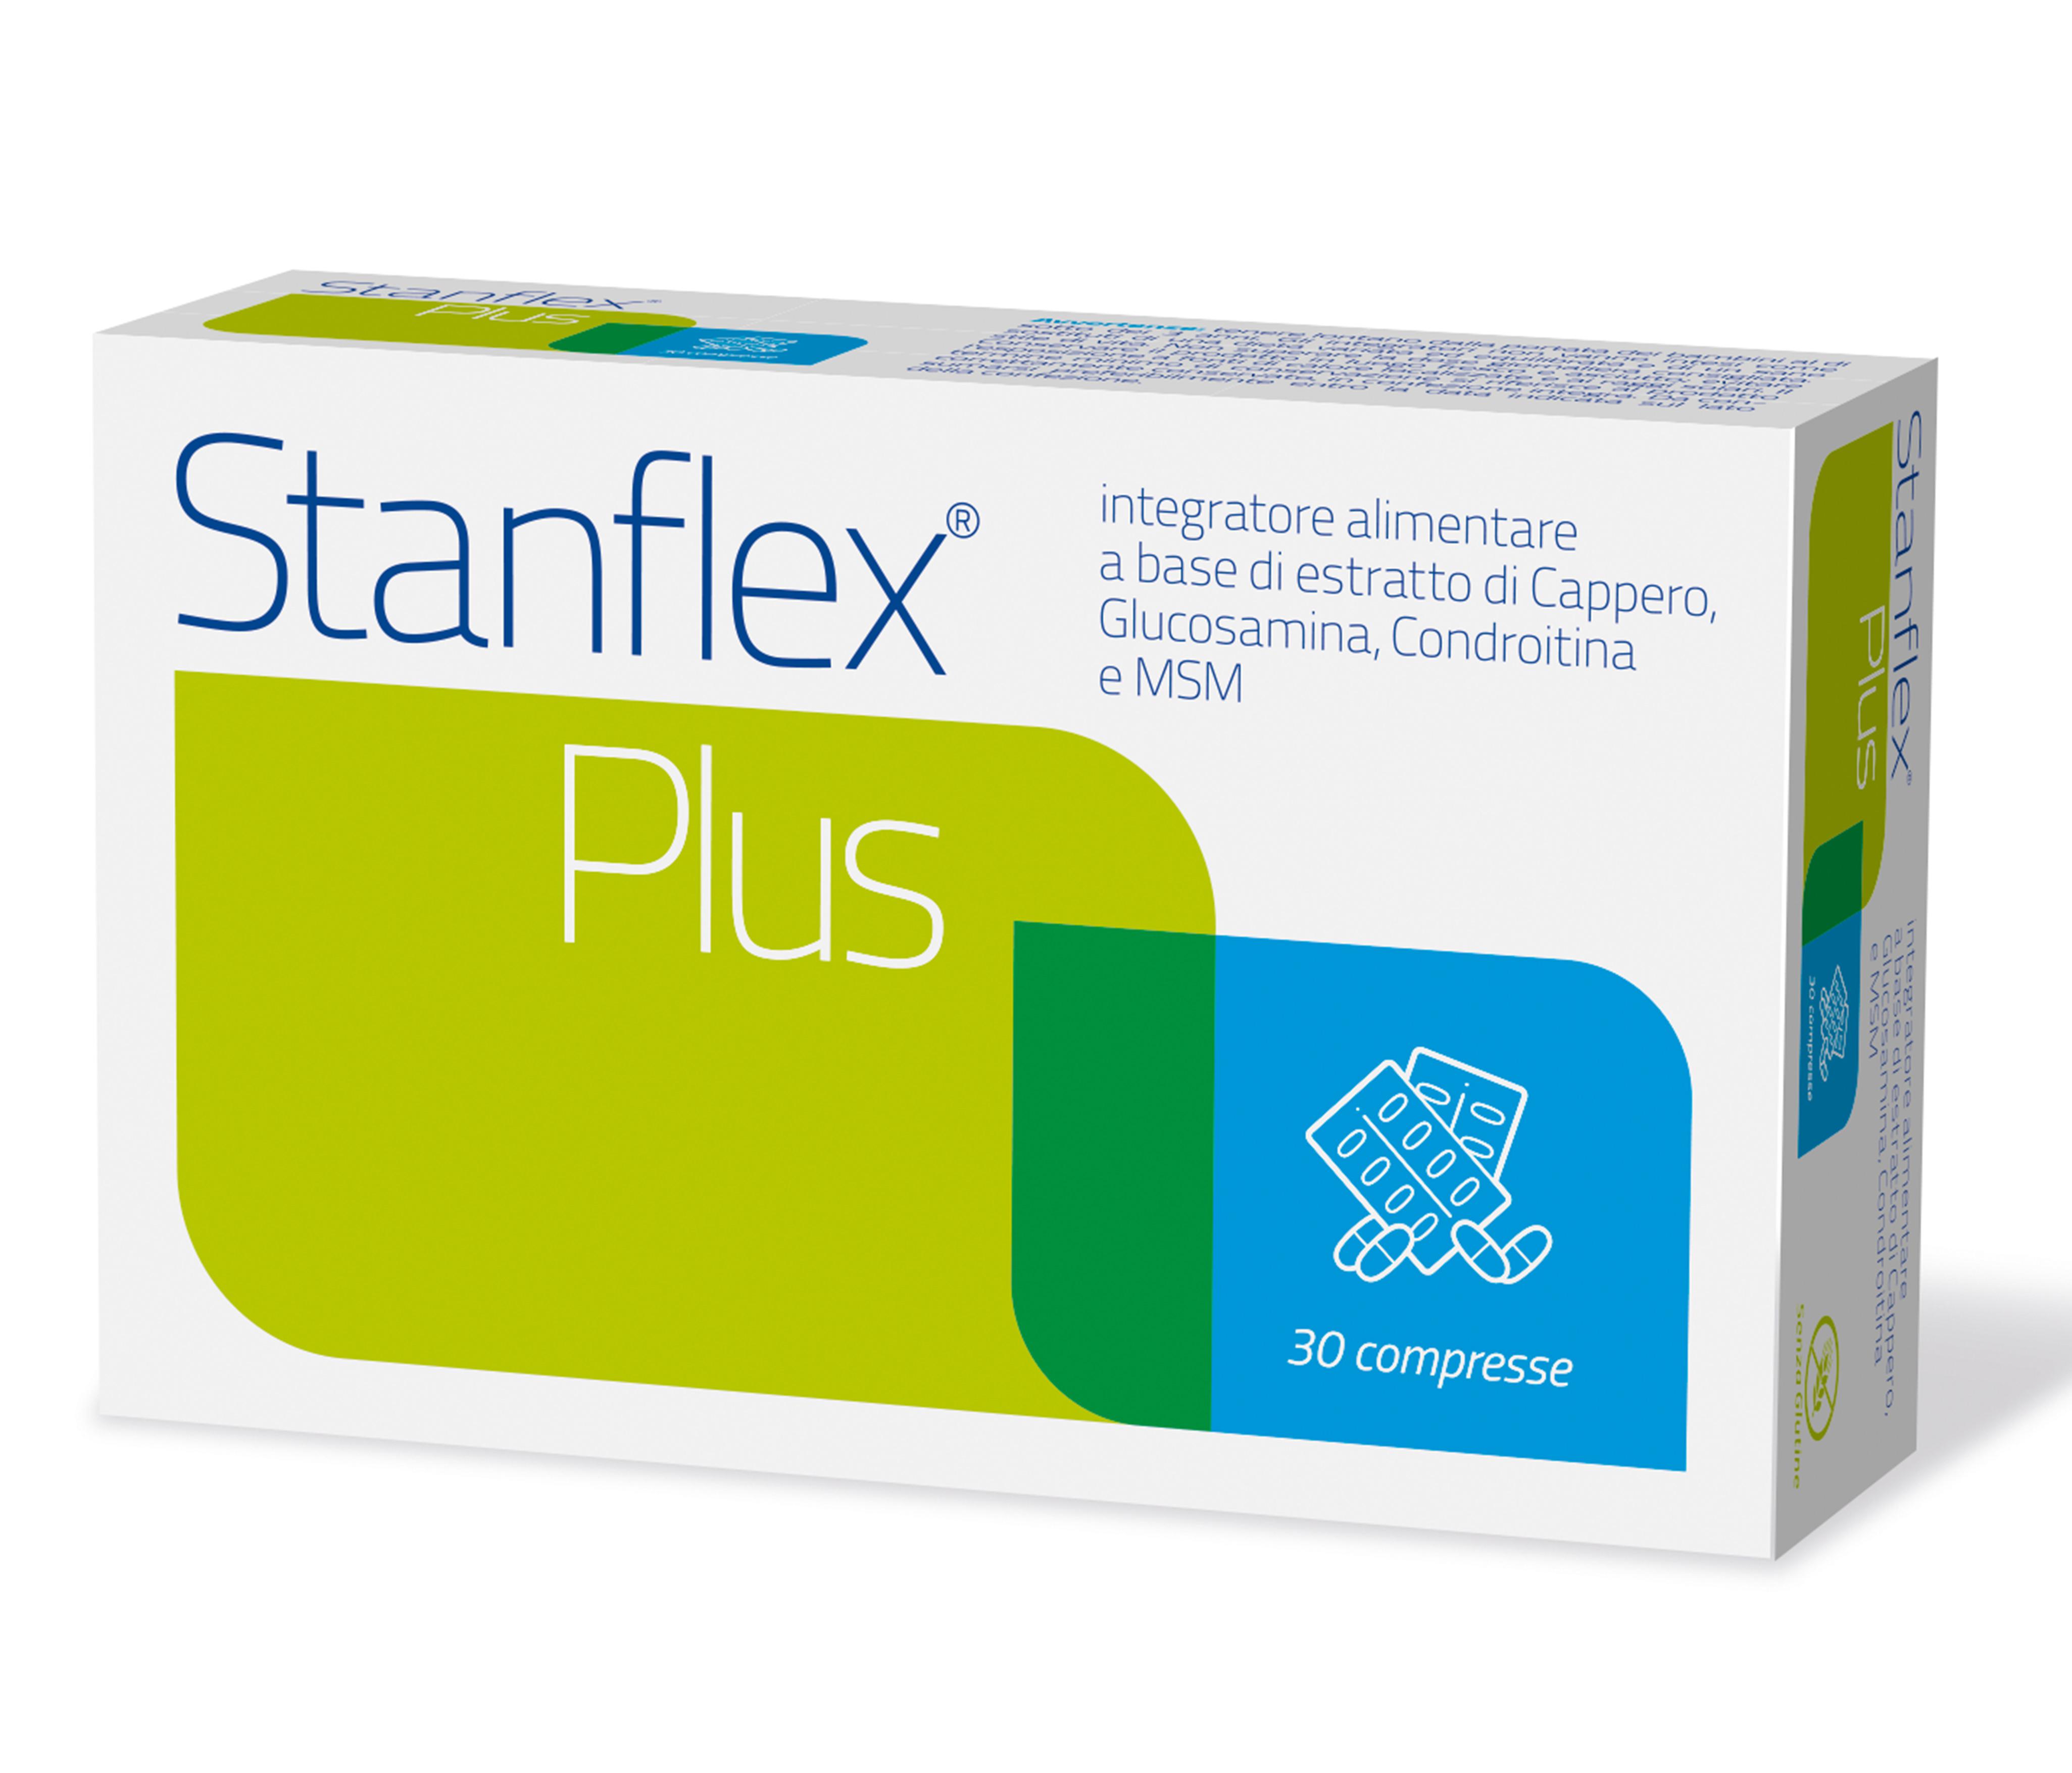 Stanflex Plus